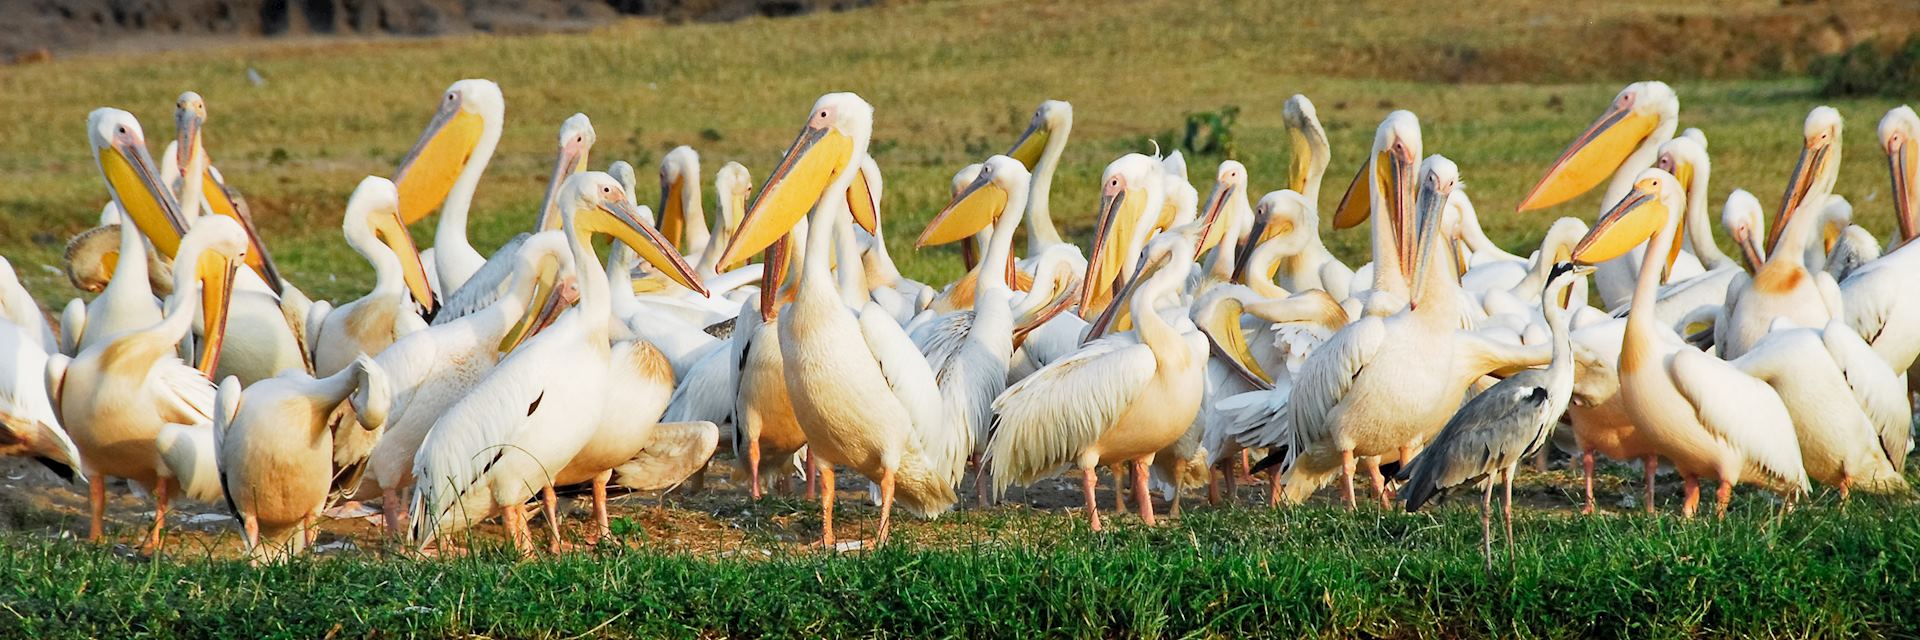 Large Ugandan great white pelicans, Kazinga Channel